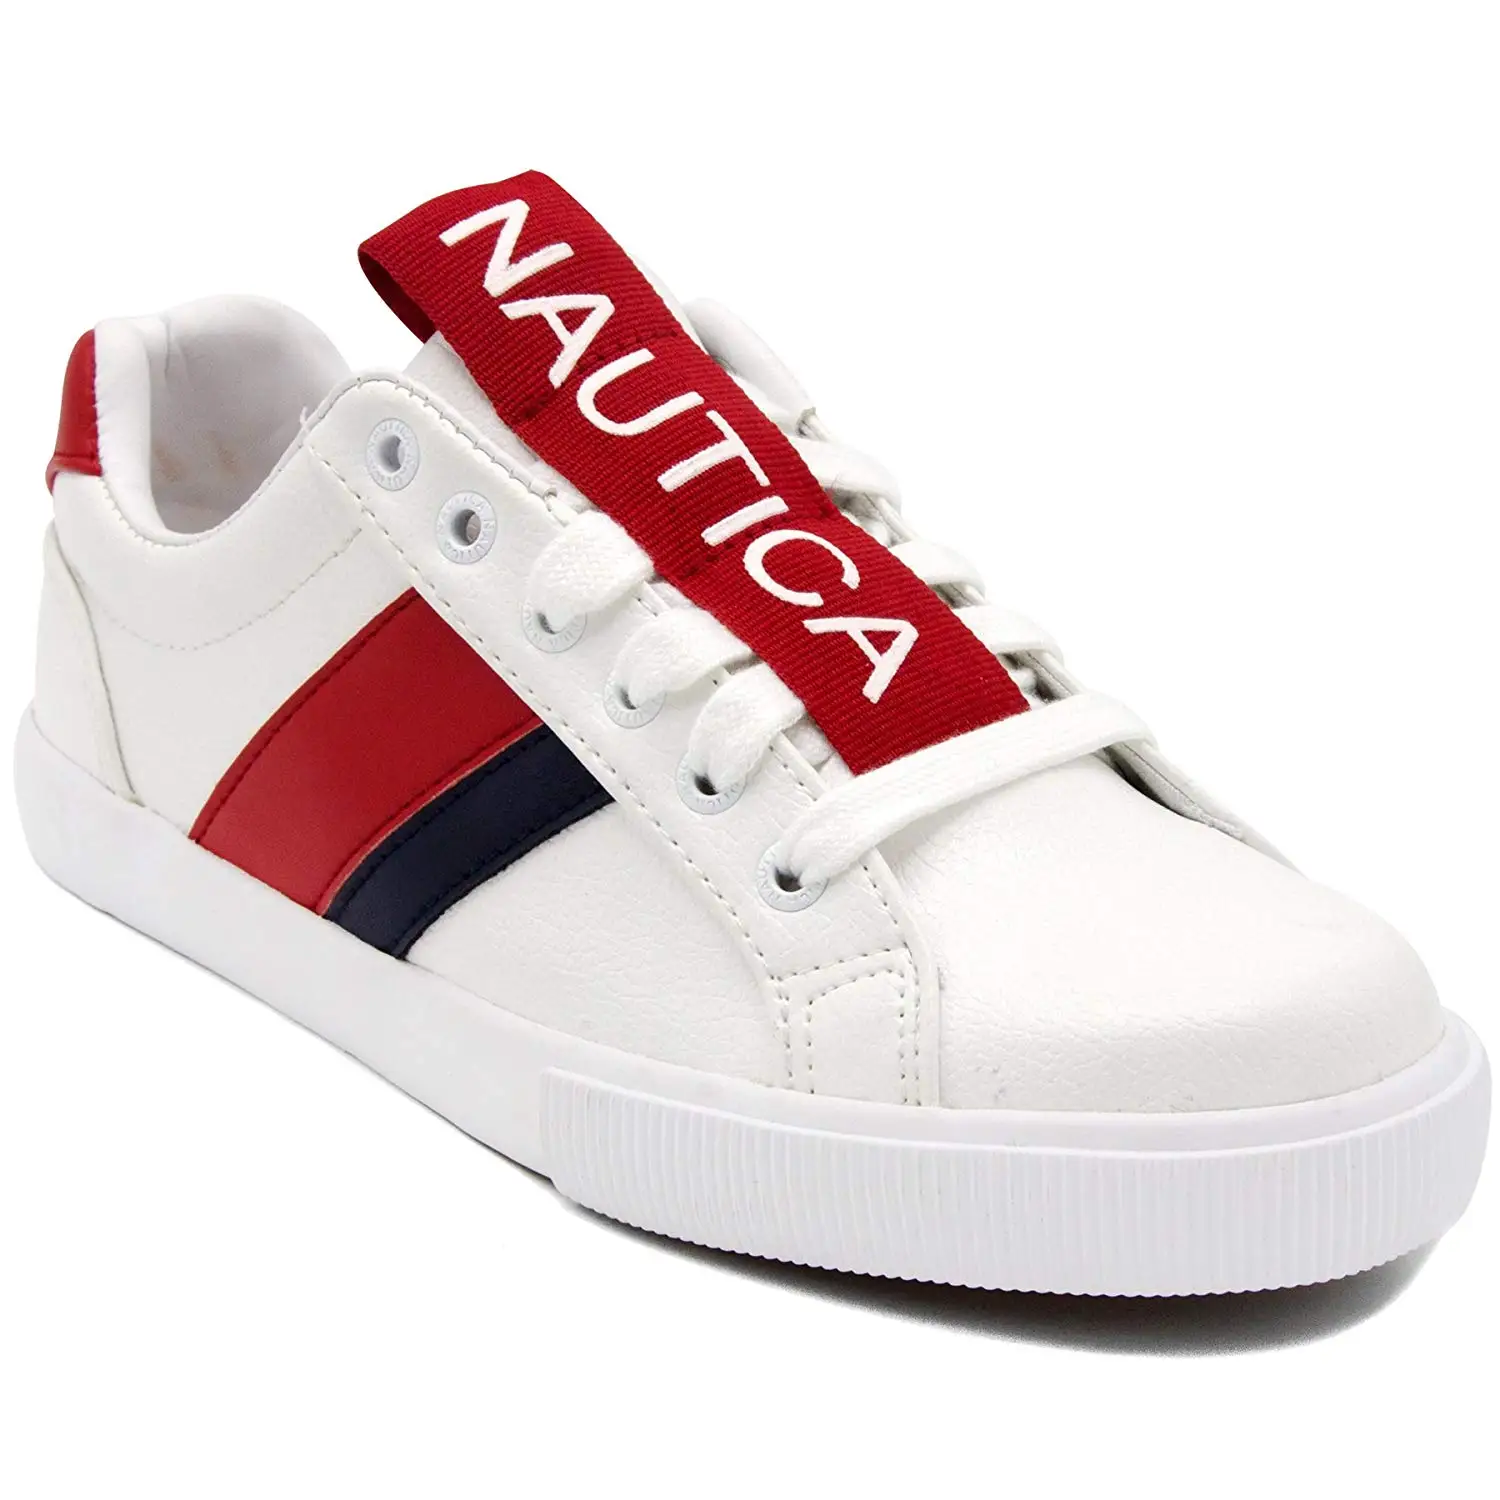 nautica shoes